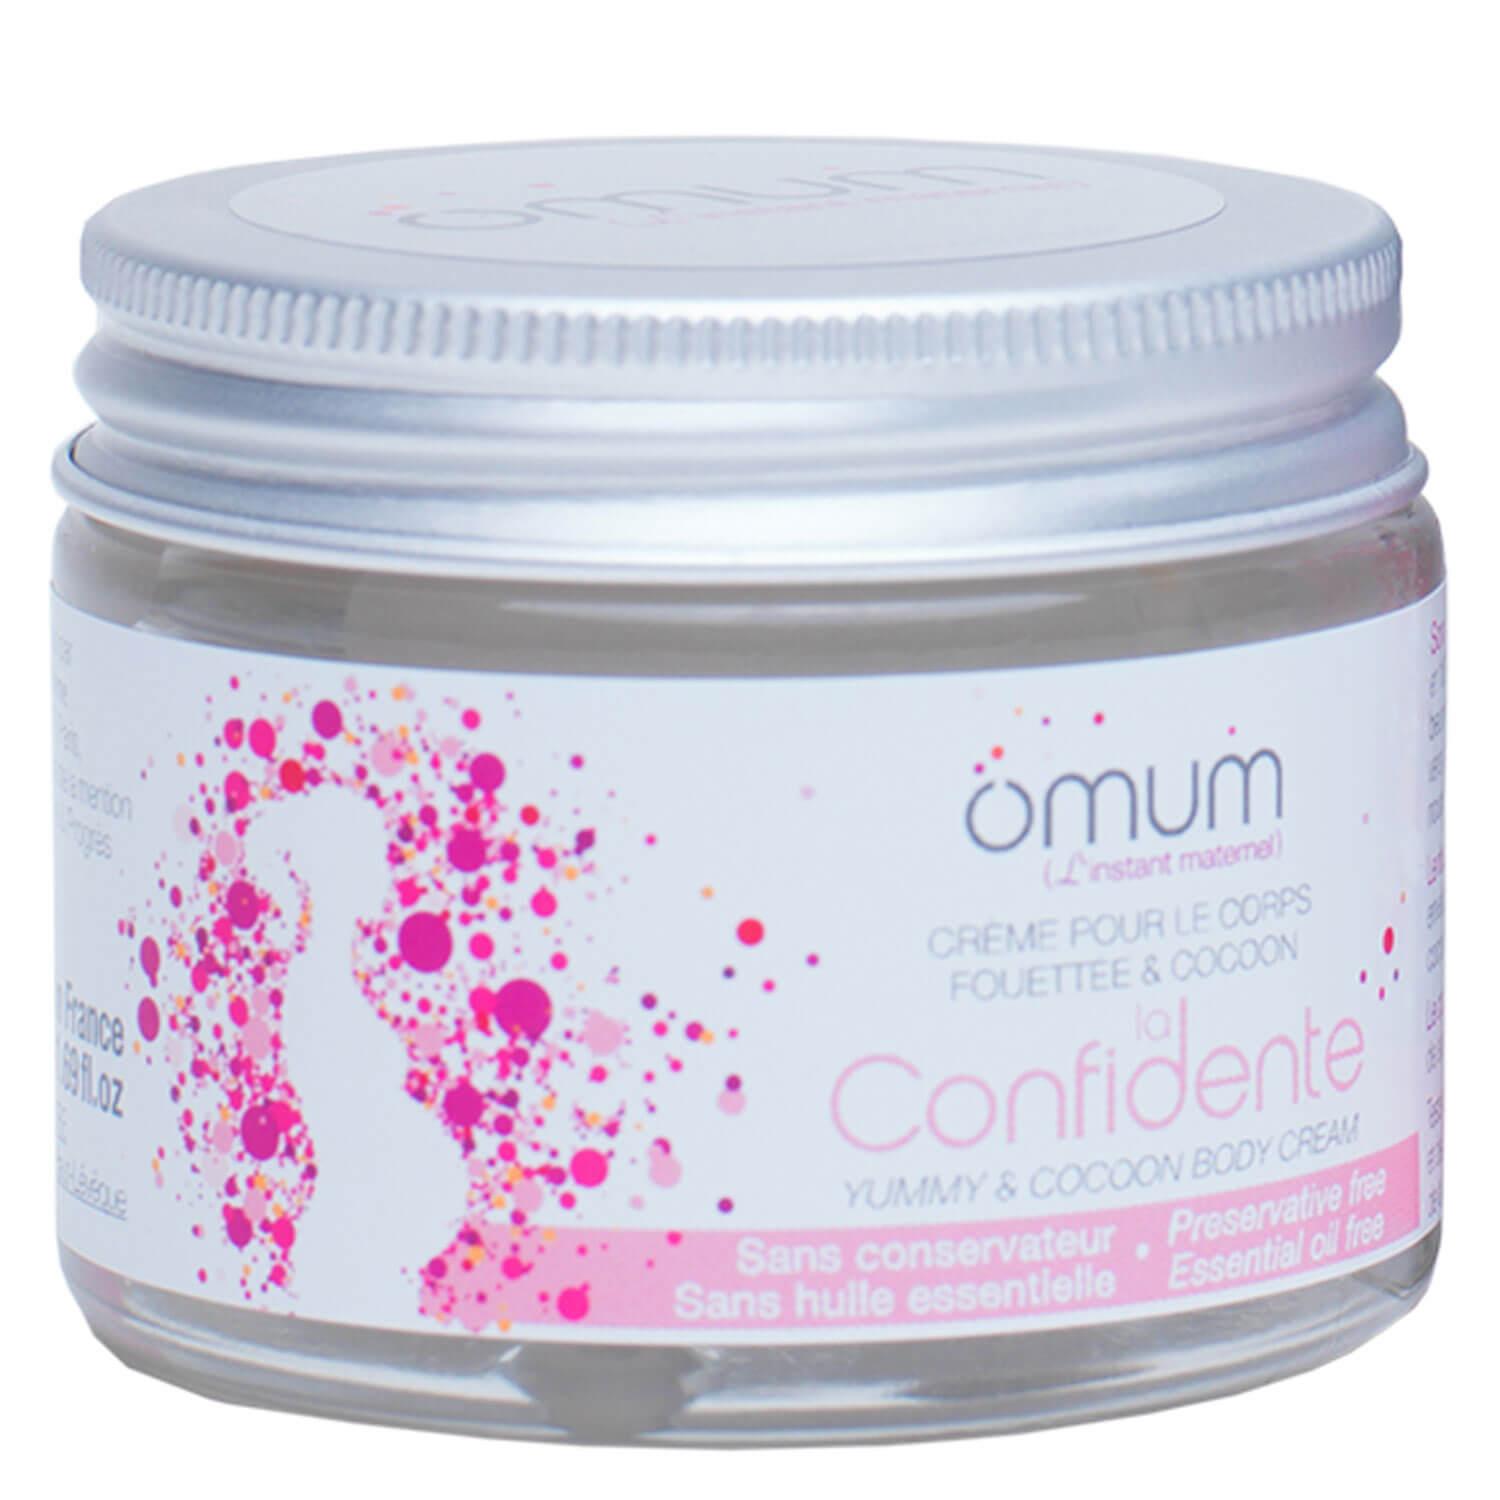 omum - La Confidente Yummy & Cocoon Body Cream